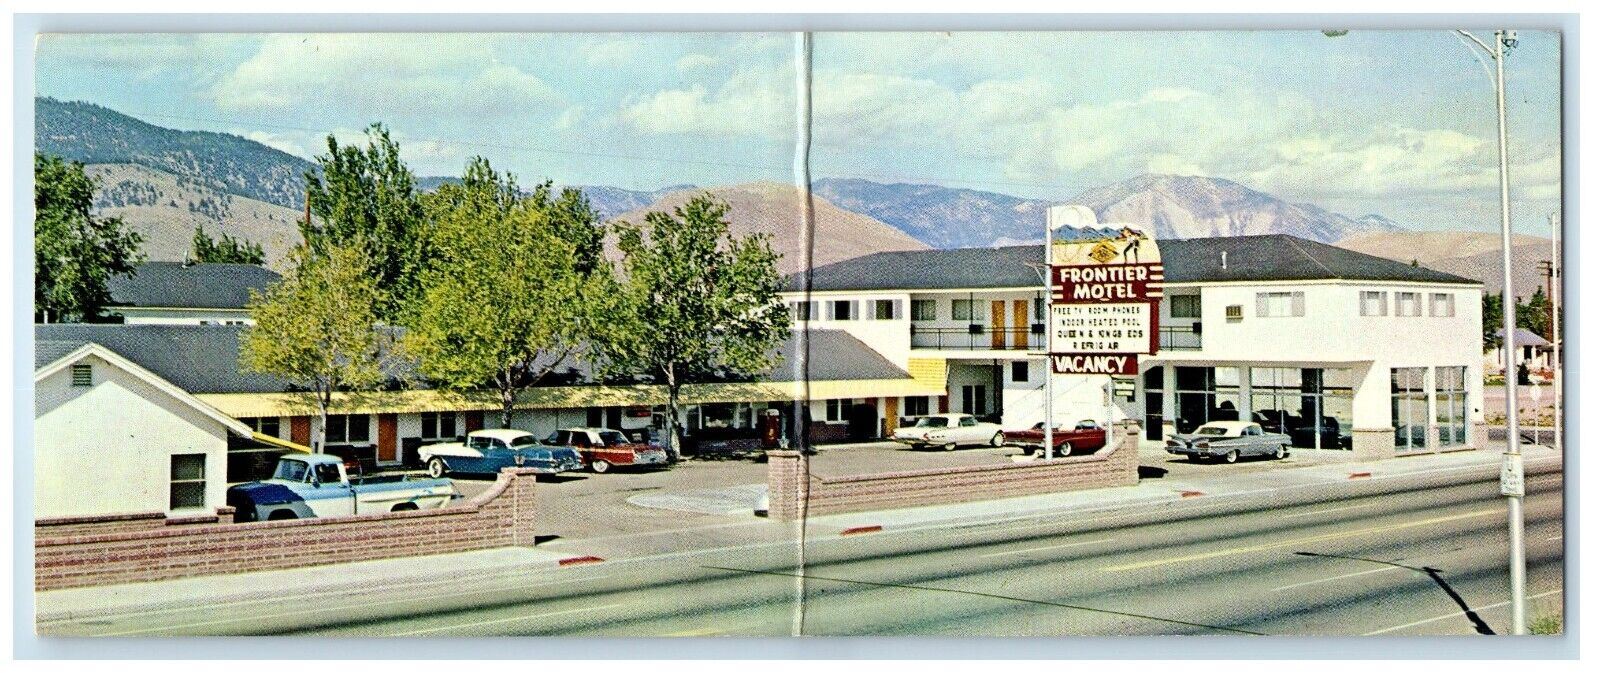 1966 Frontier Motel Roadside Cars Carson City Nevada NV Panoramic Postcard